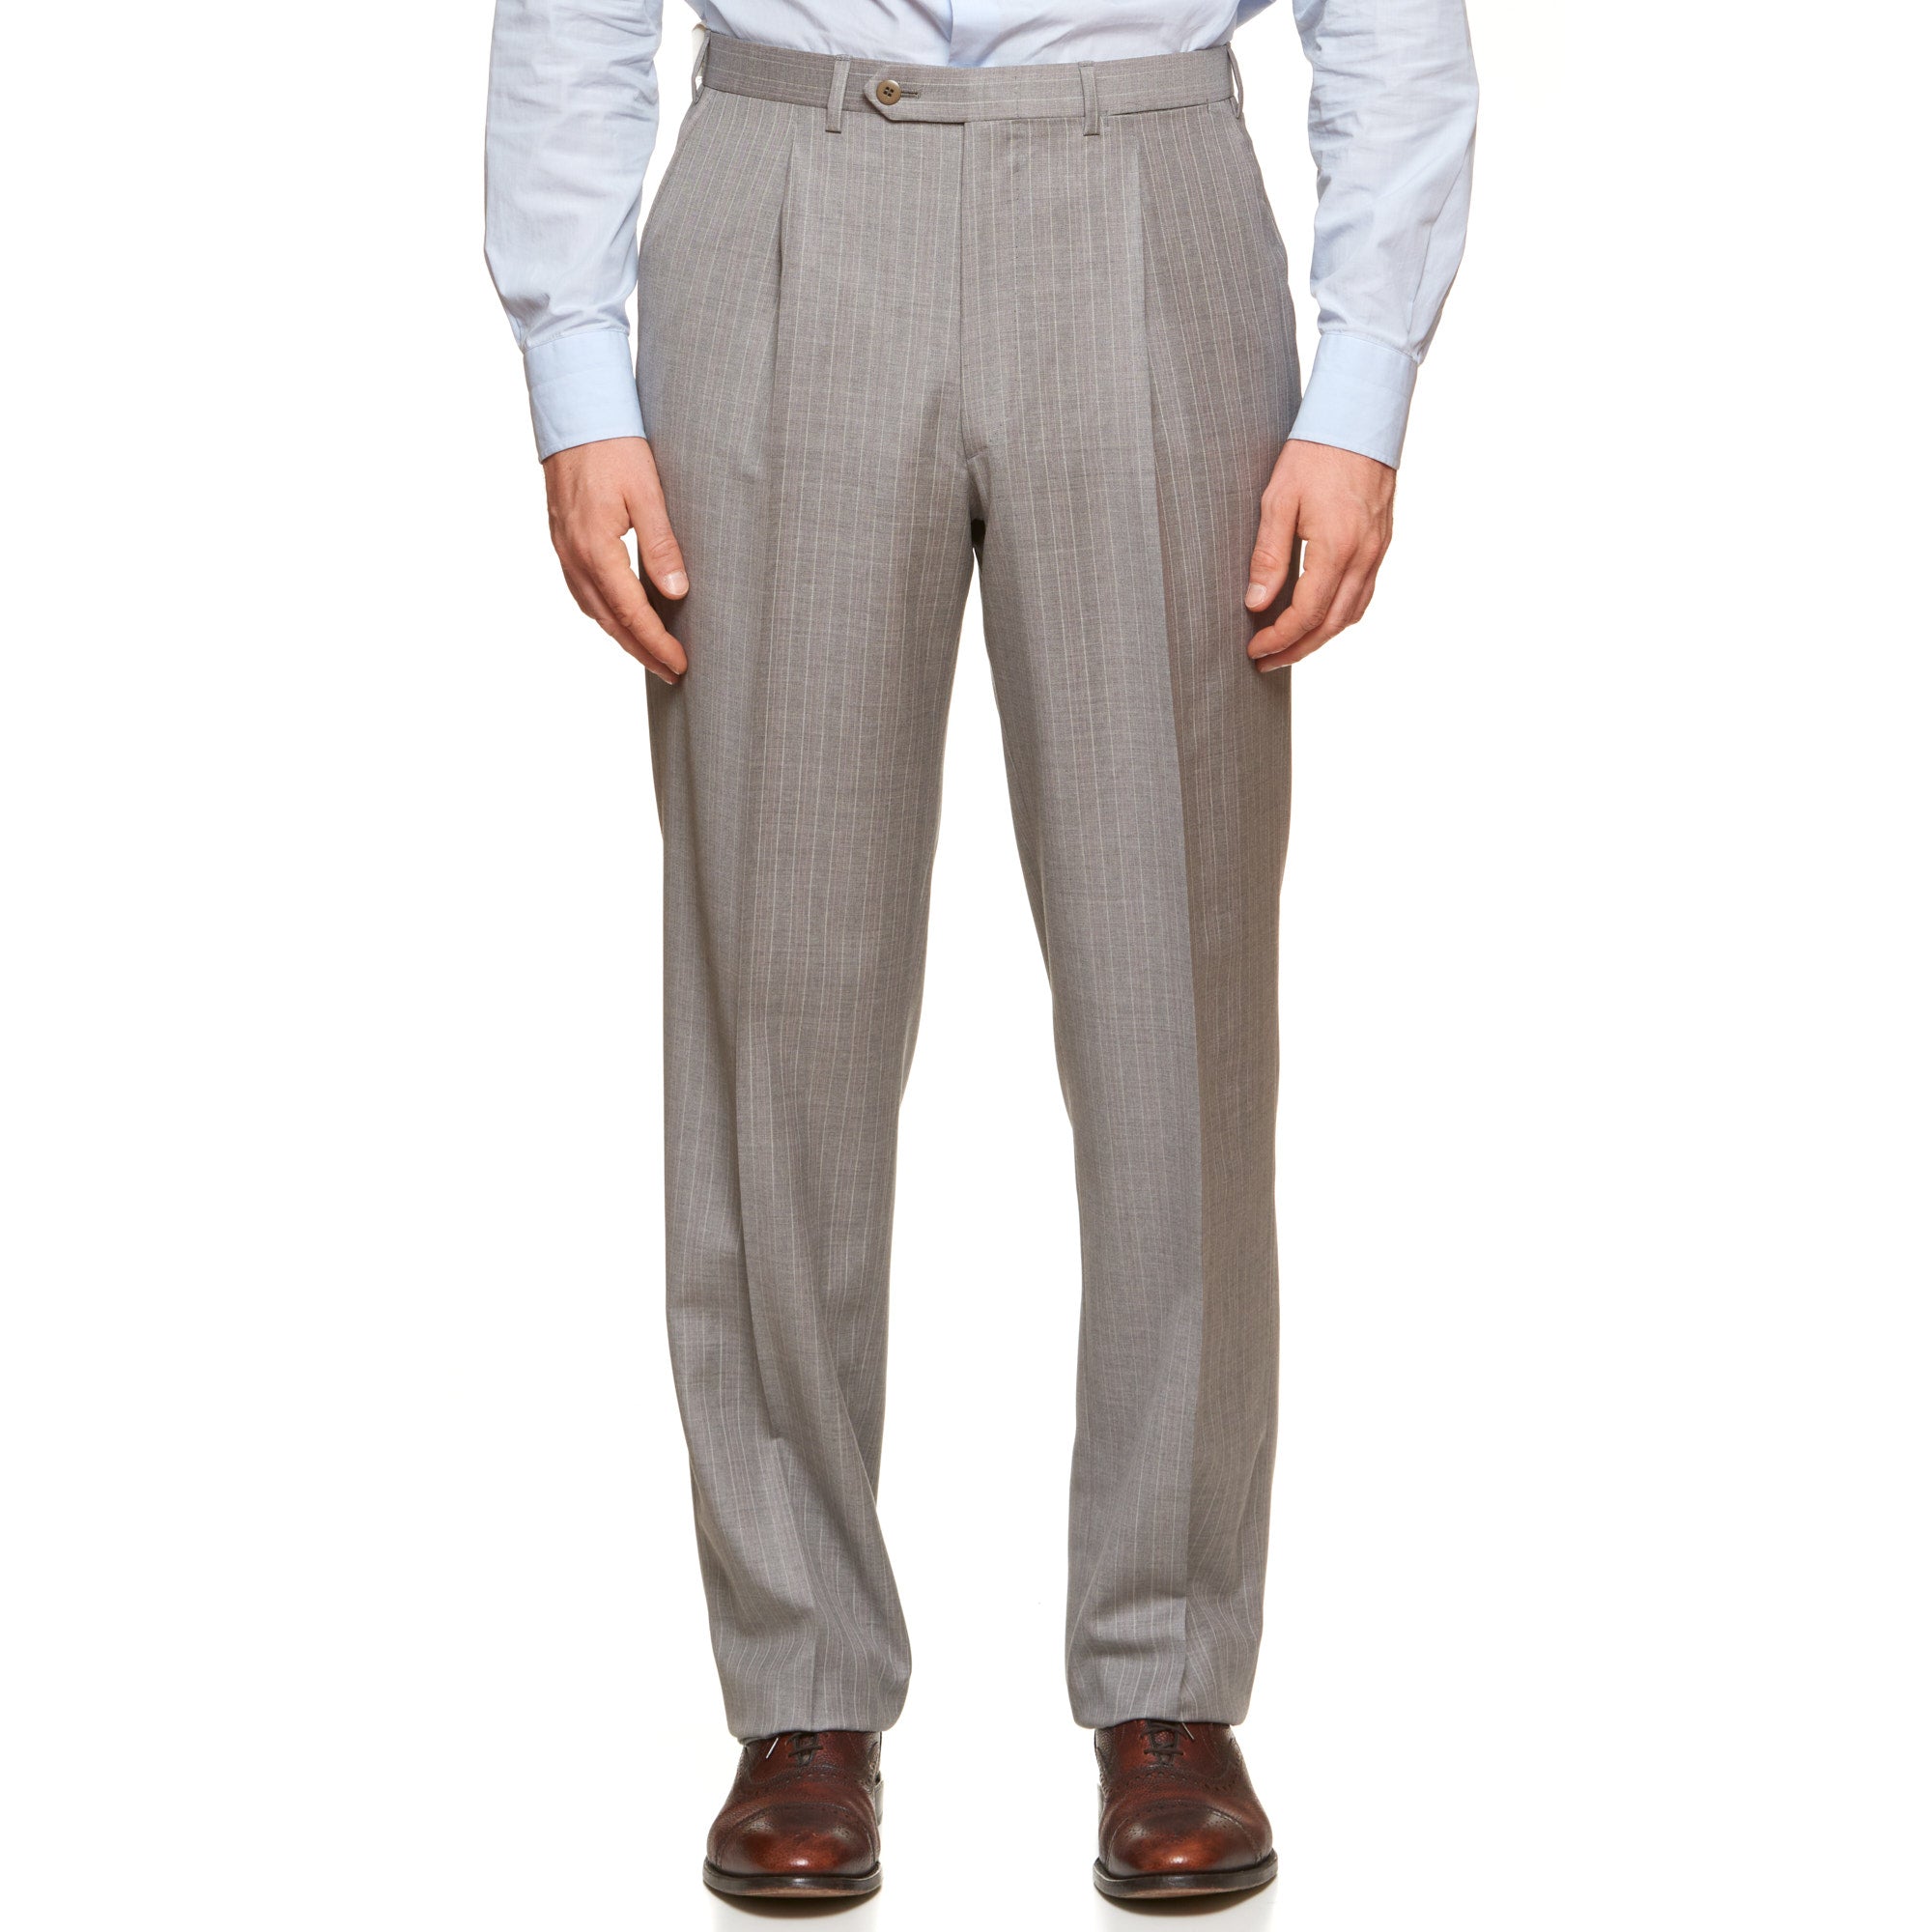 BRIONI "CHIGI" Handmade Gray Striped Wool Suit EU 52 NEW US 42 BRIONI